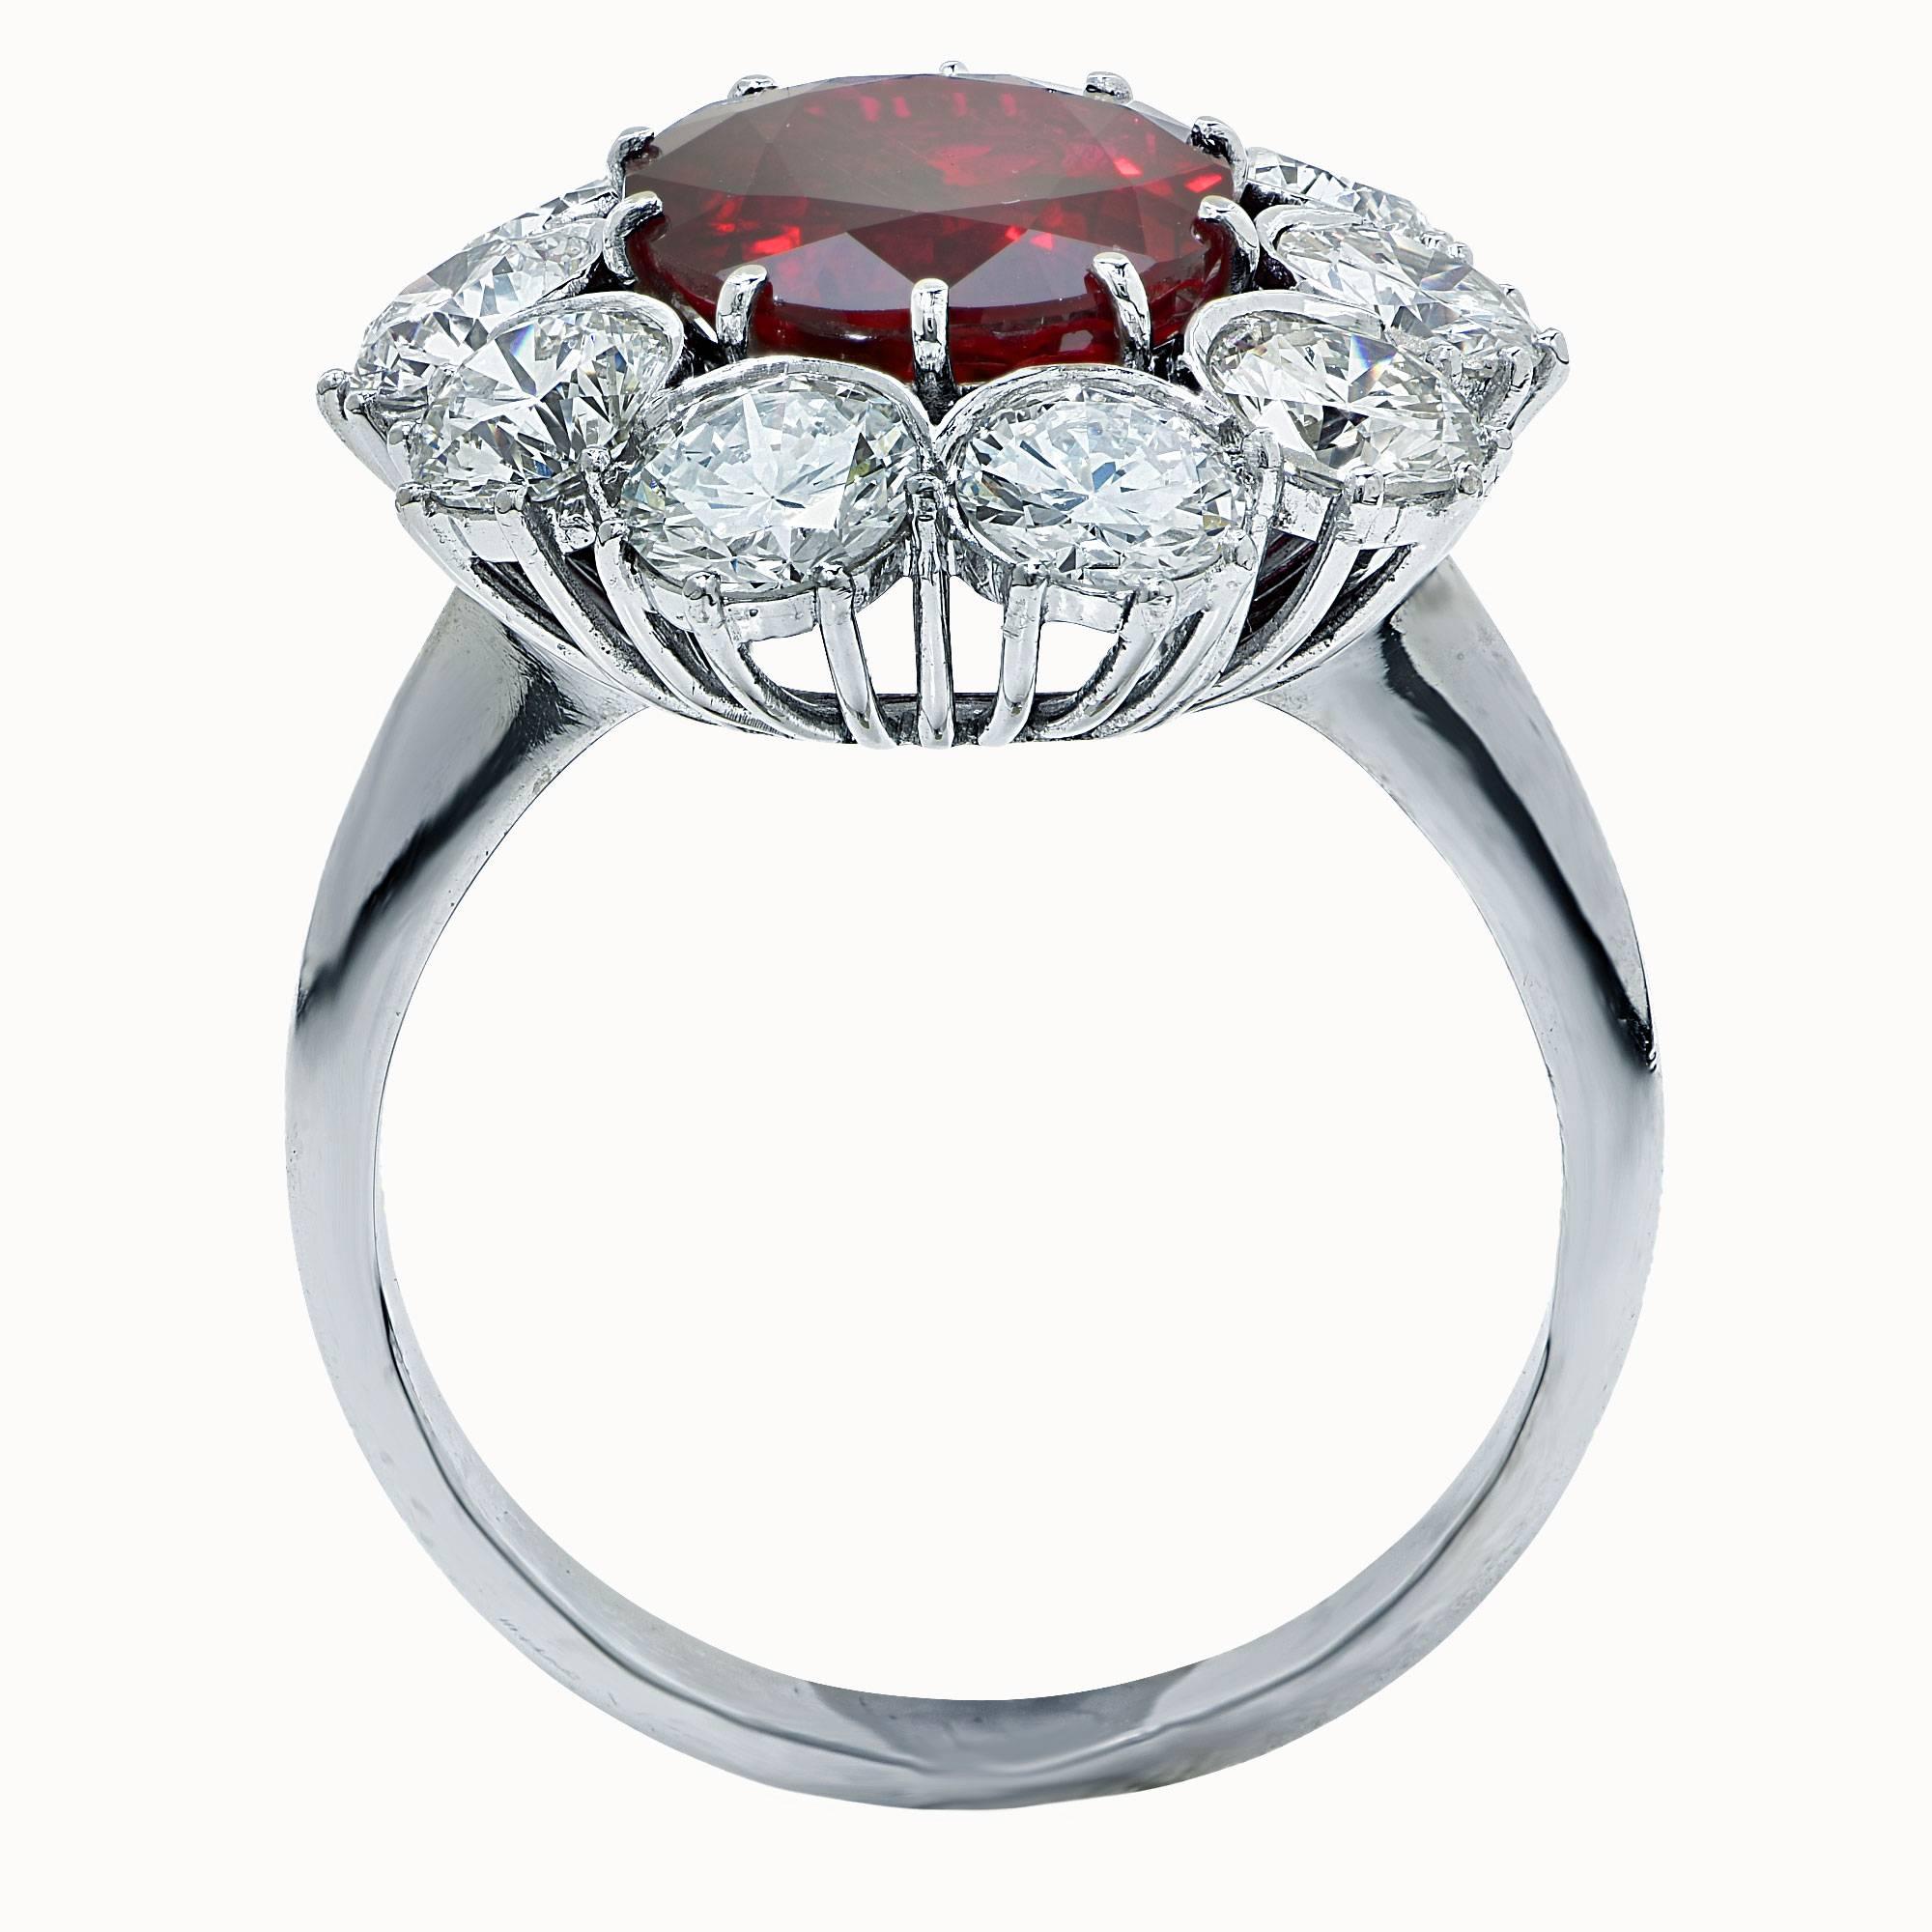 Women's 5.52 Carat Ruby Diamond Cluster Ring